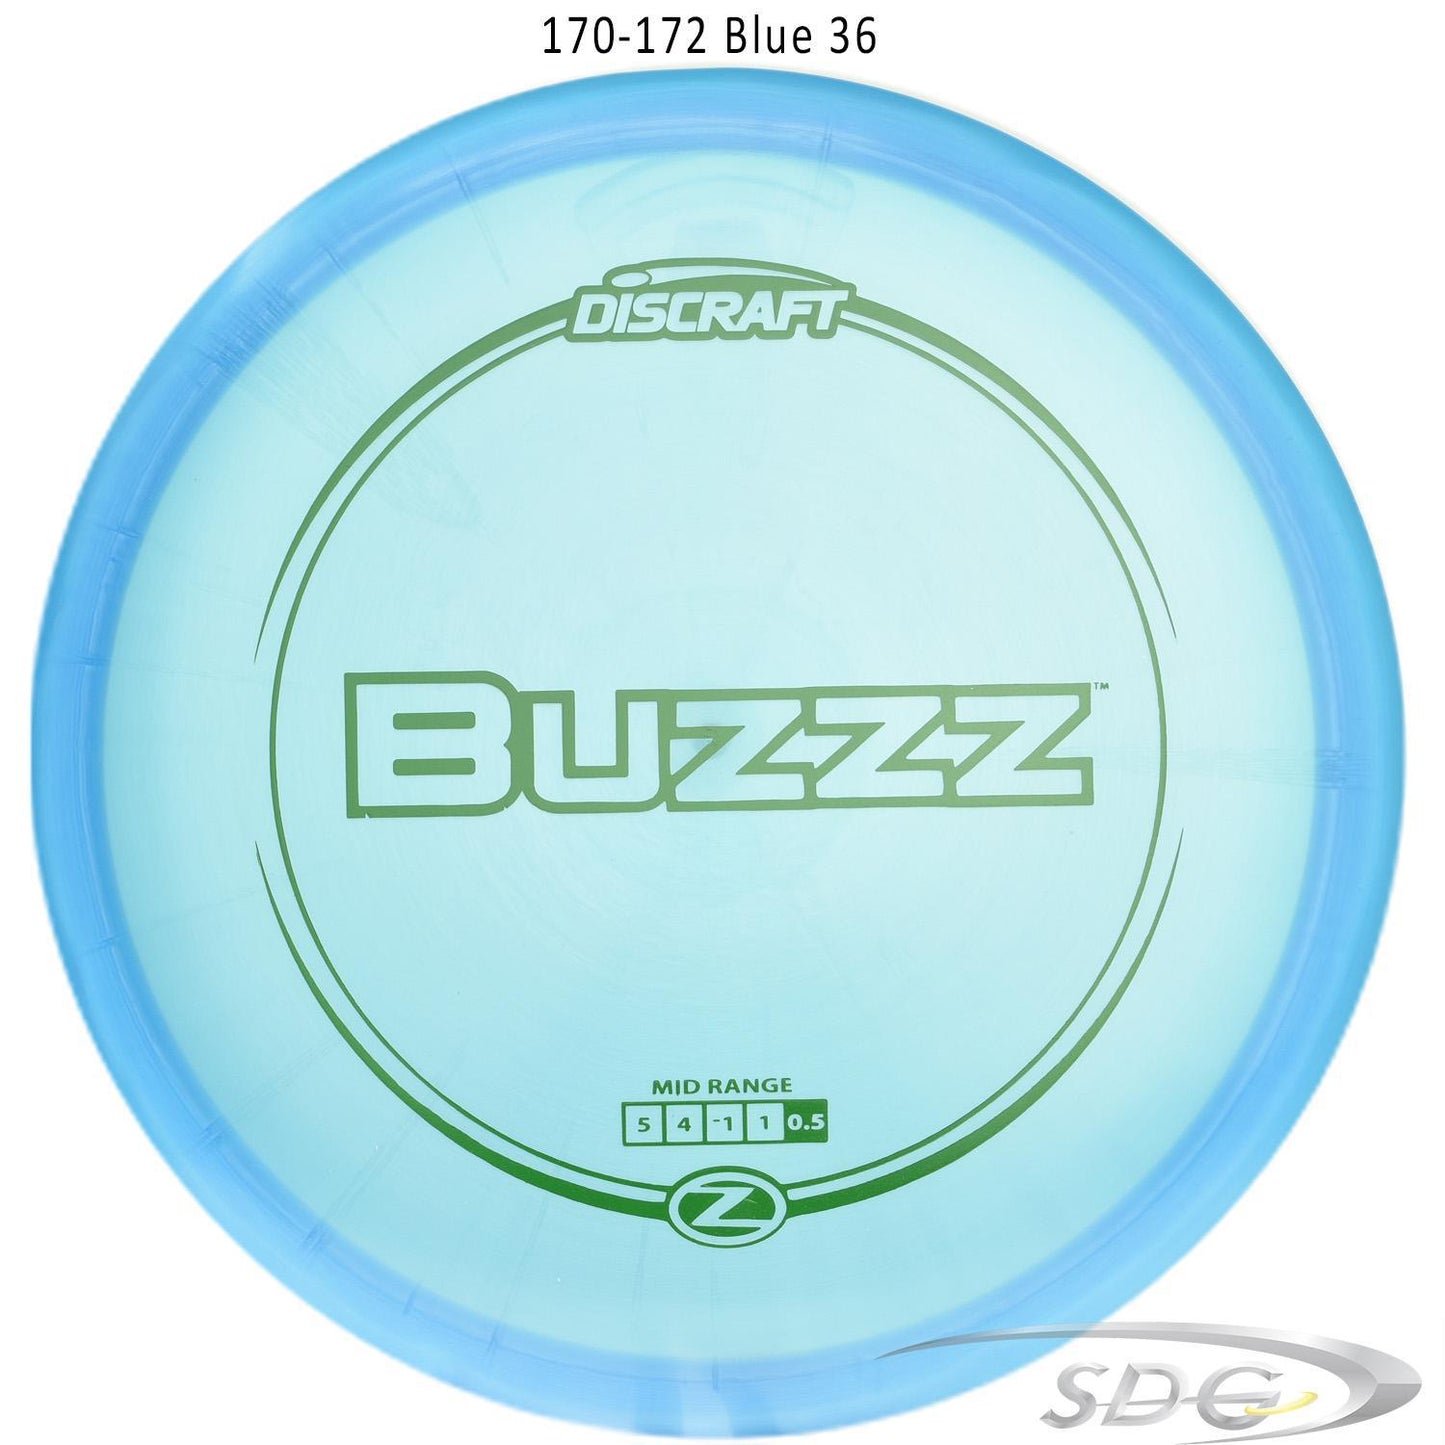 discraft-z-line-buzzz-disc-golf-mid-range-172-170-weights 170-172 Blue 36 